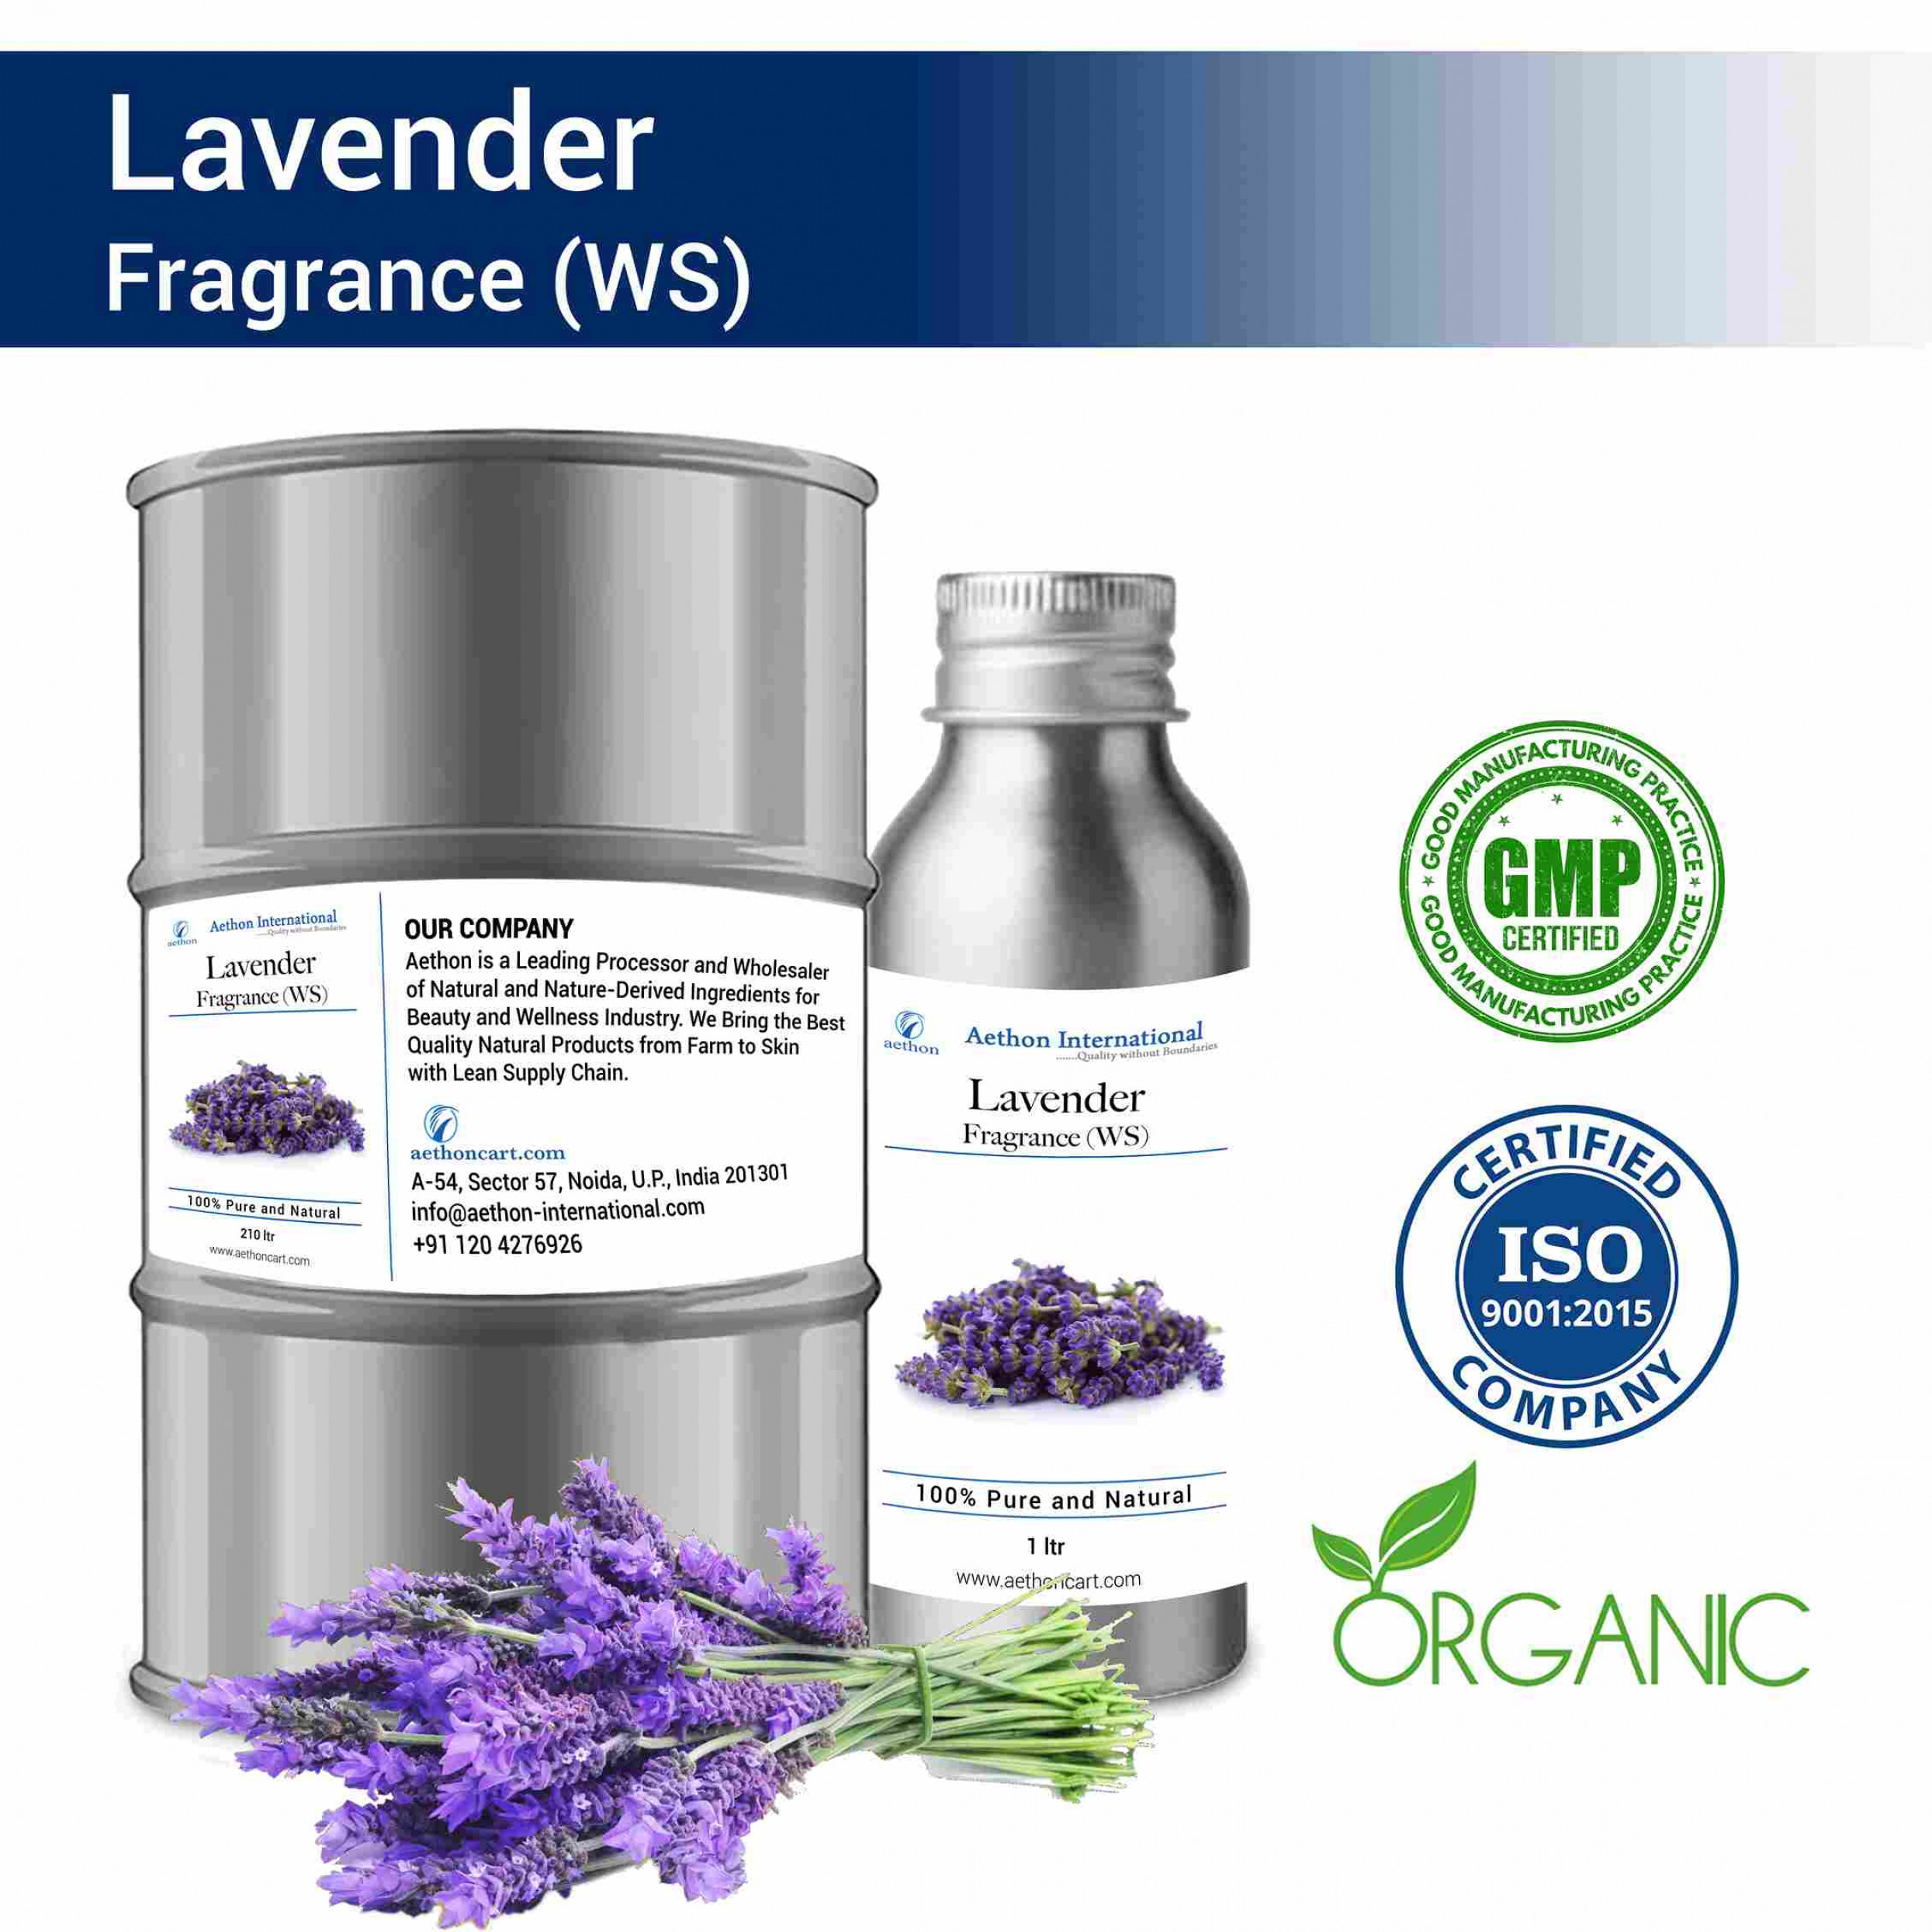 Lavender Fragrance (WS)